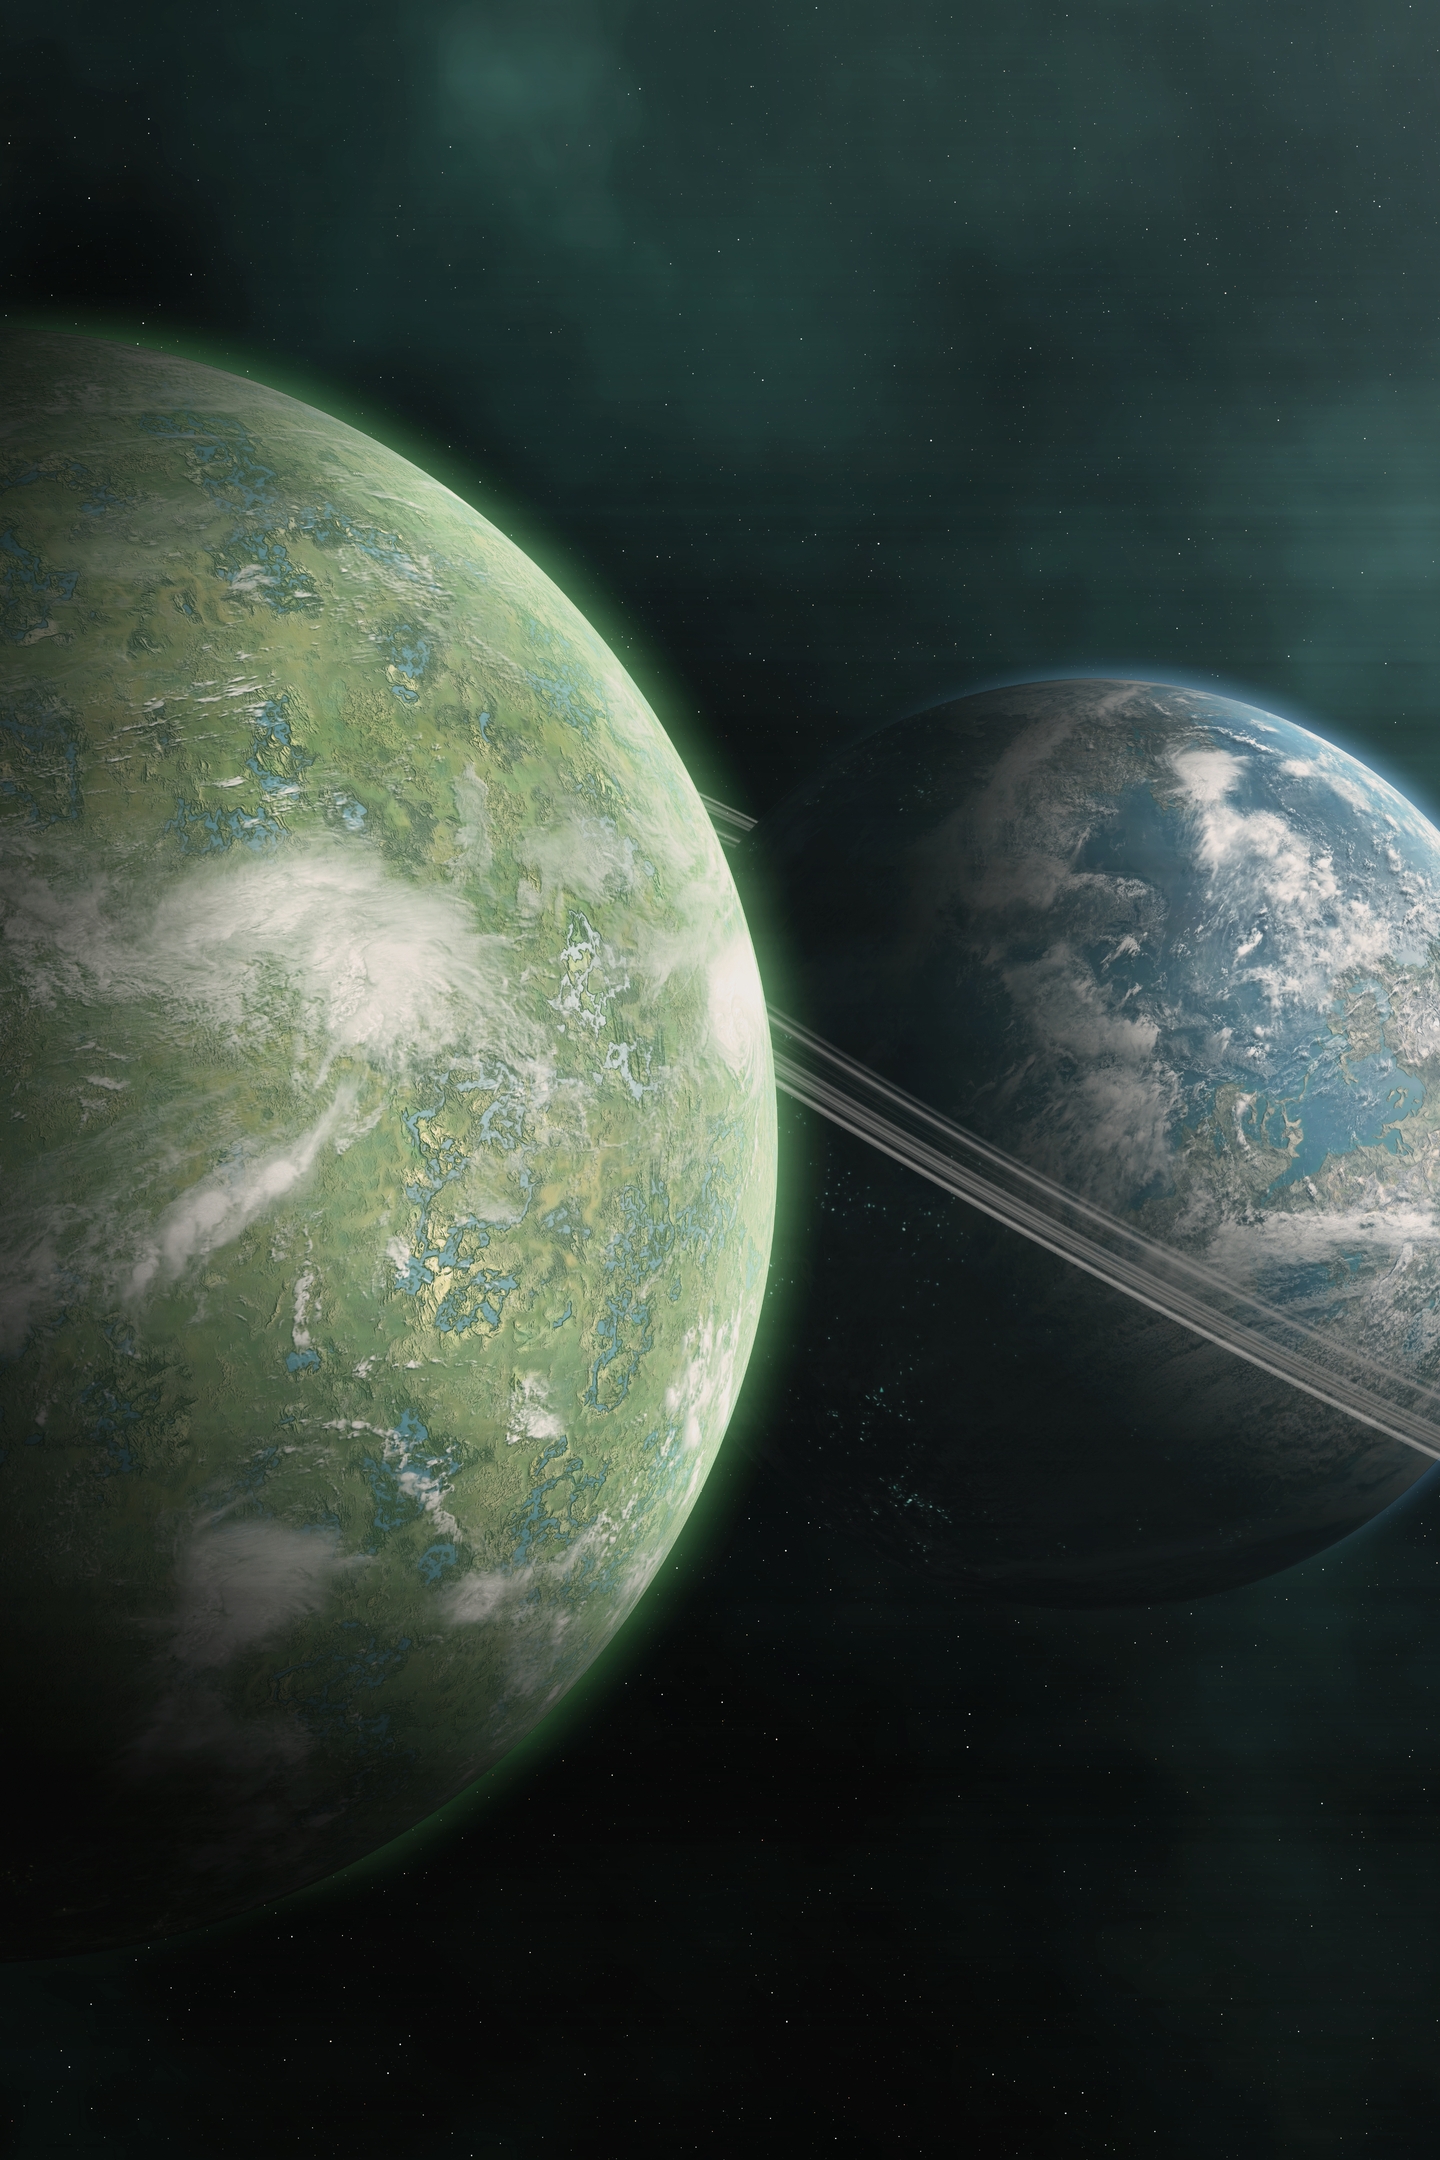 Image: The planet, Kepler 684-C, ring